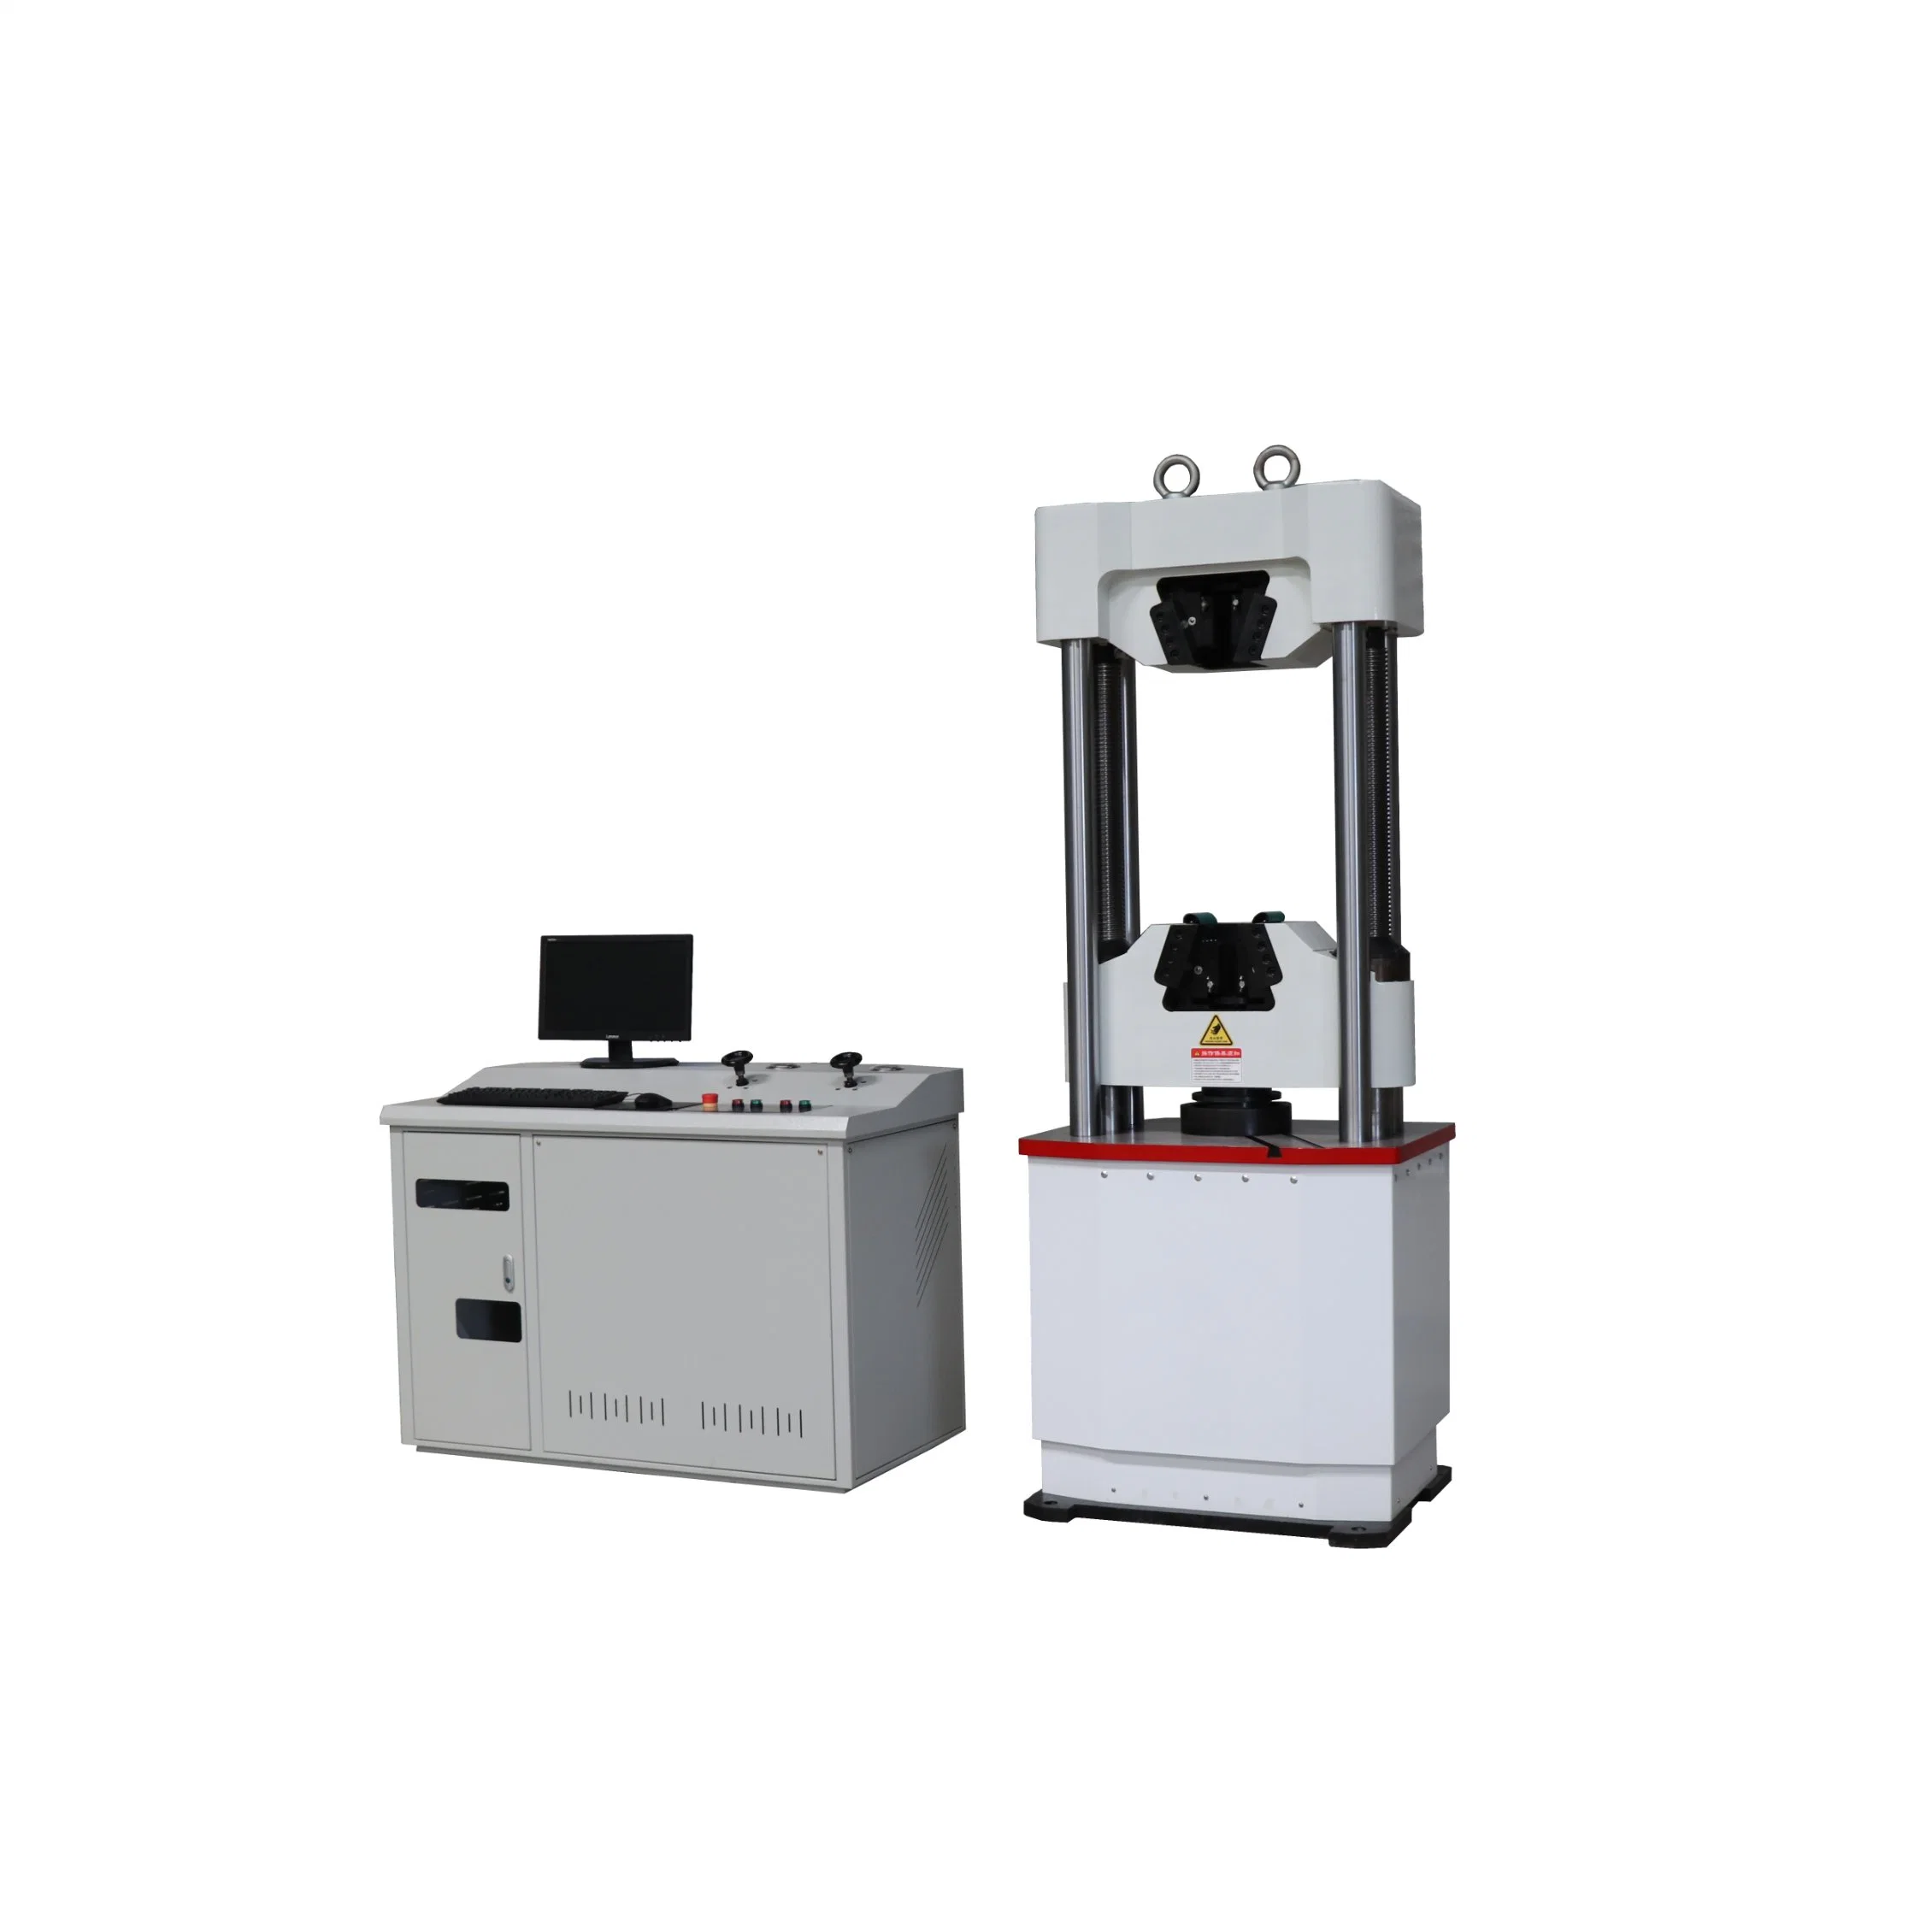 High-Precision Waw-600kn Computerized Electro-Hydraulic Servo-Controlled Hydraulic Universal Testing Machine for Laboratory